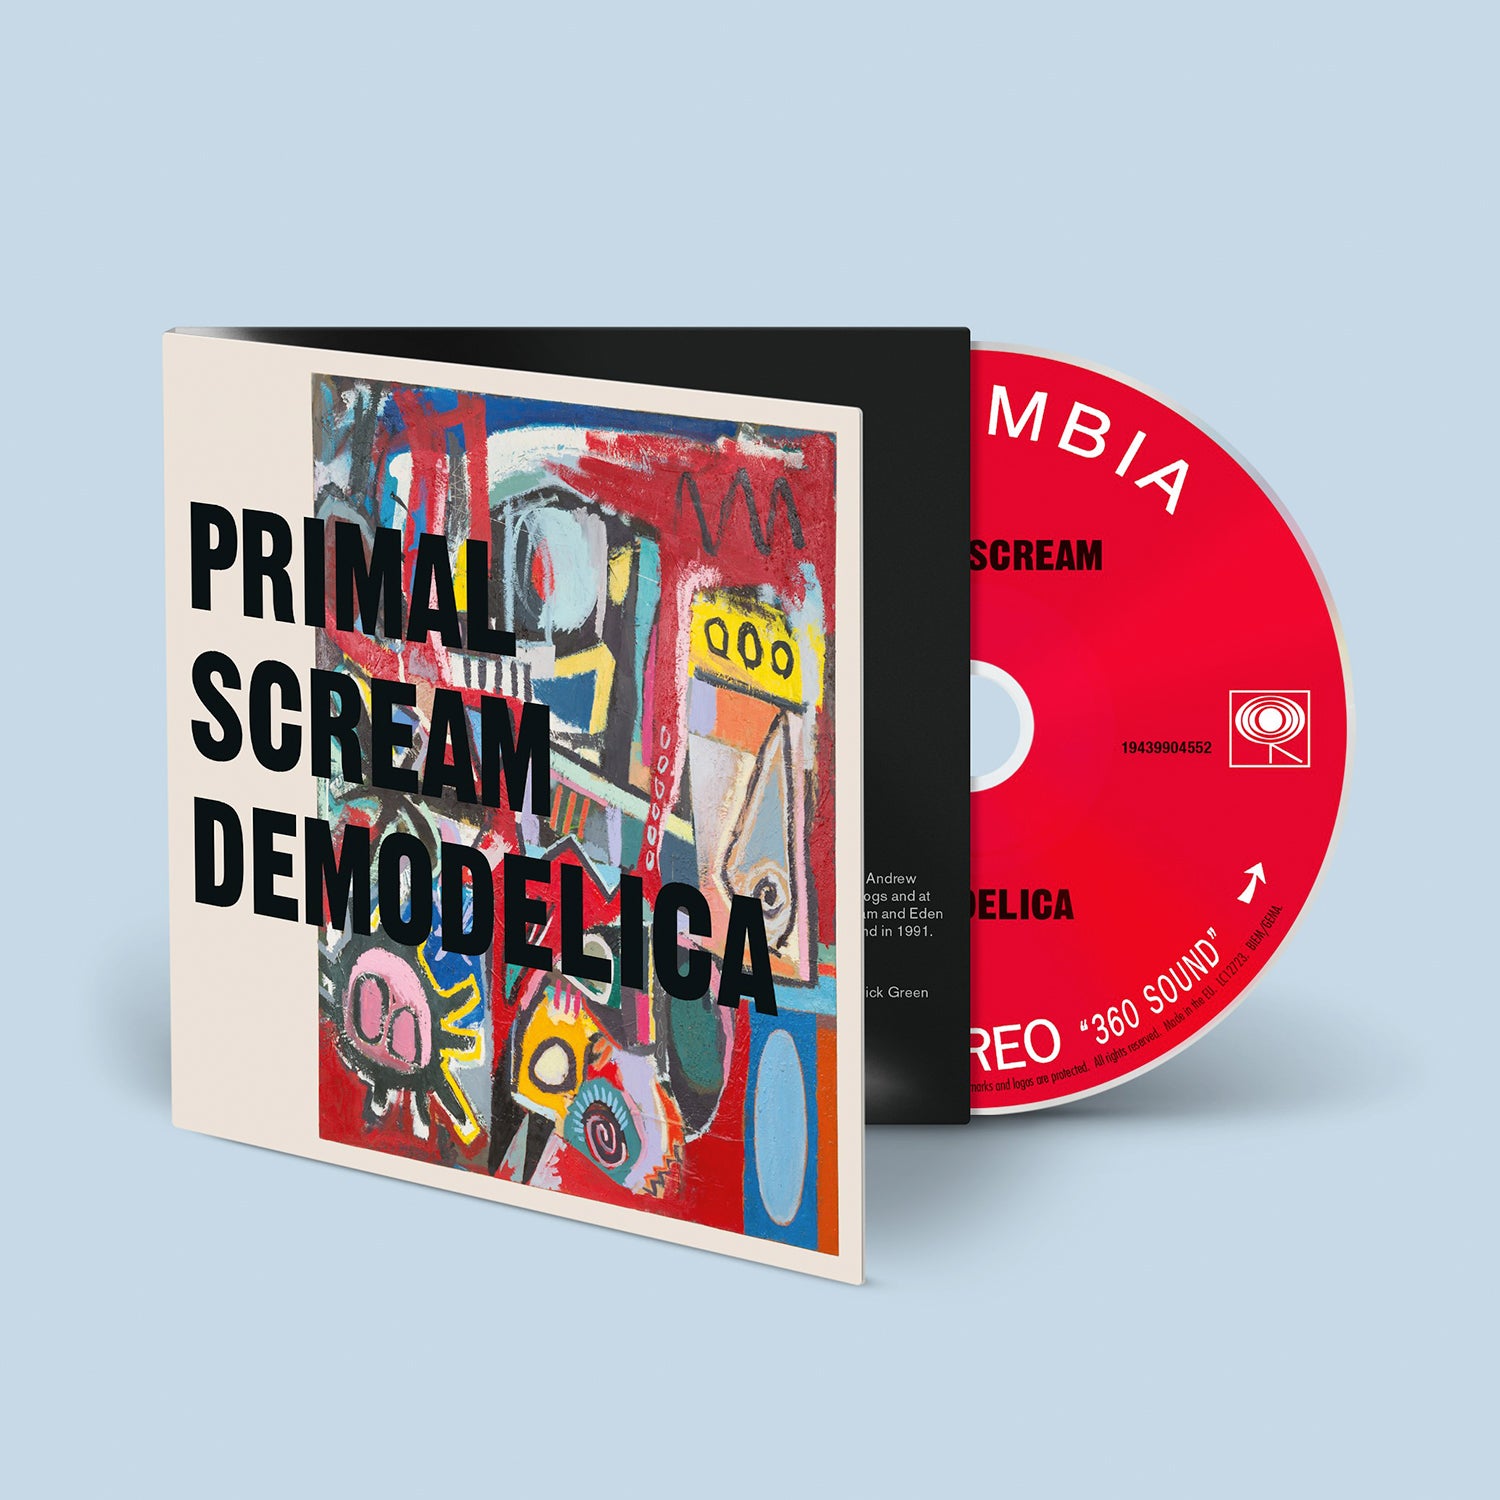 Primal Scream | The Official Website